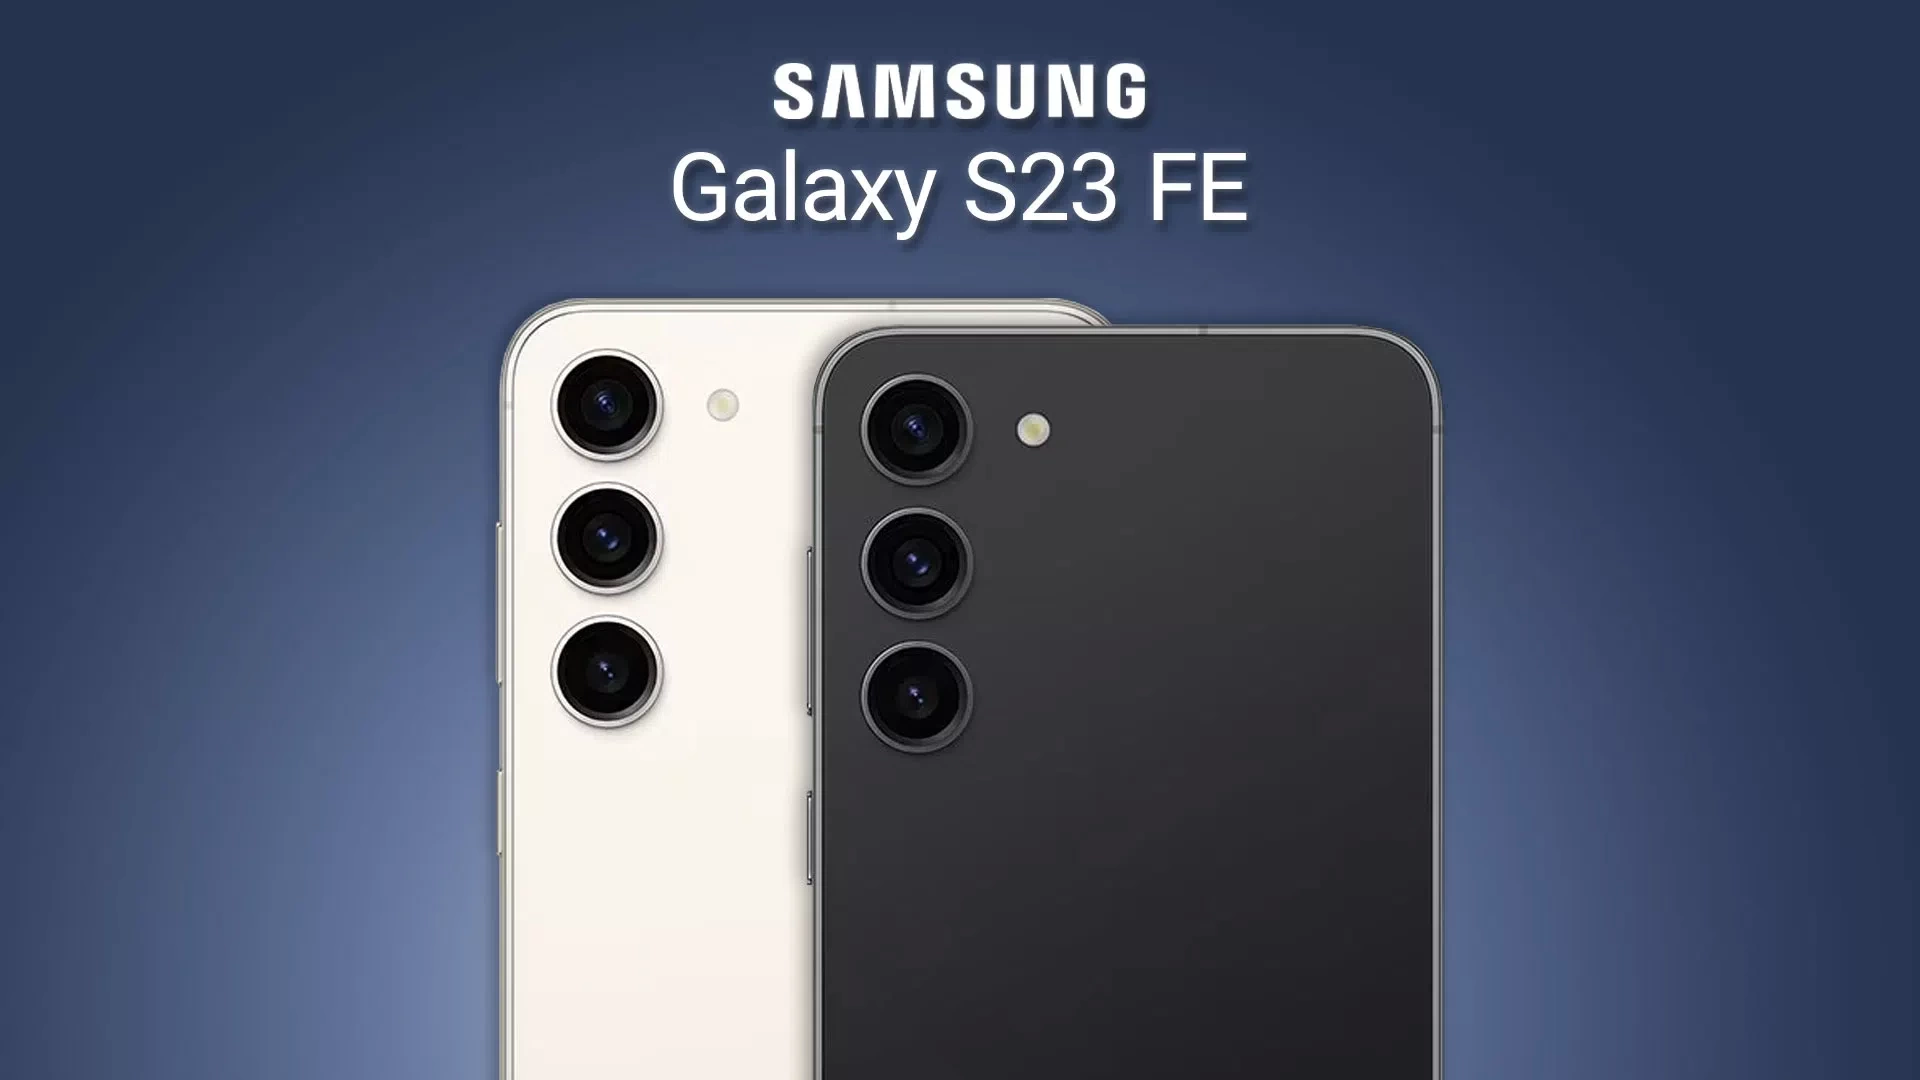 Samsung Galaxy S23 FE camera details